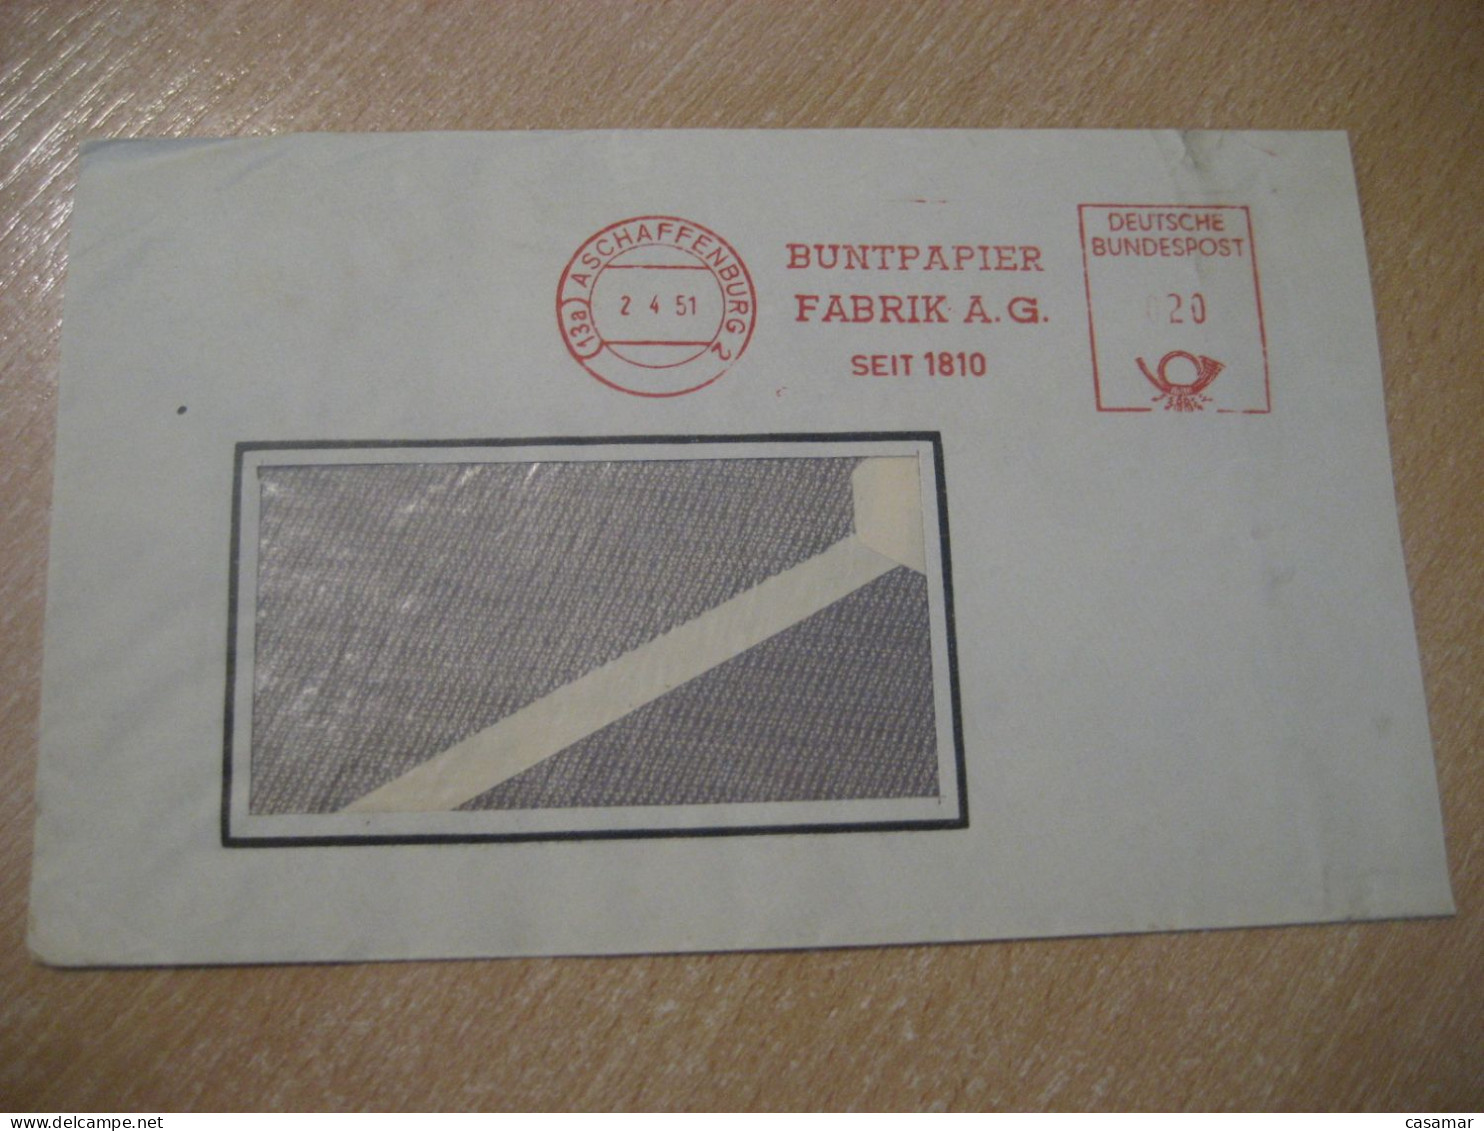 ASCHAFFENBURG 1951 Buntpapier Fabrik A.G. Meter Mail Cancel Cover GERMANY - Lettres & Documents